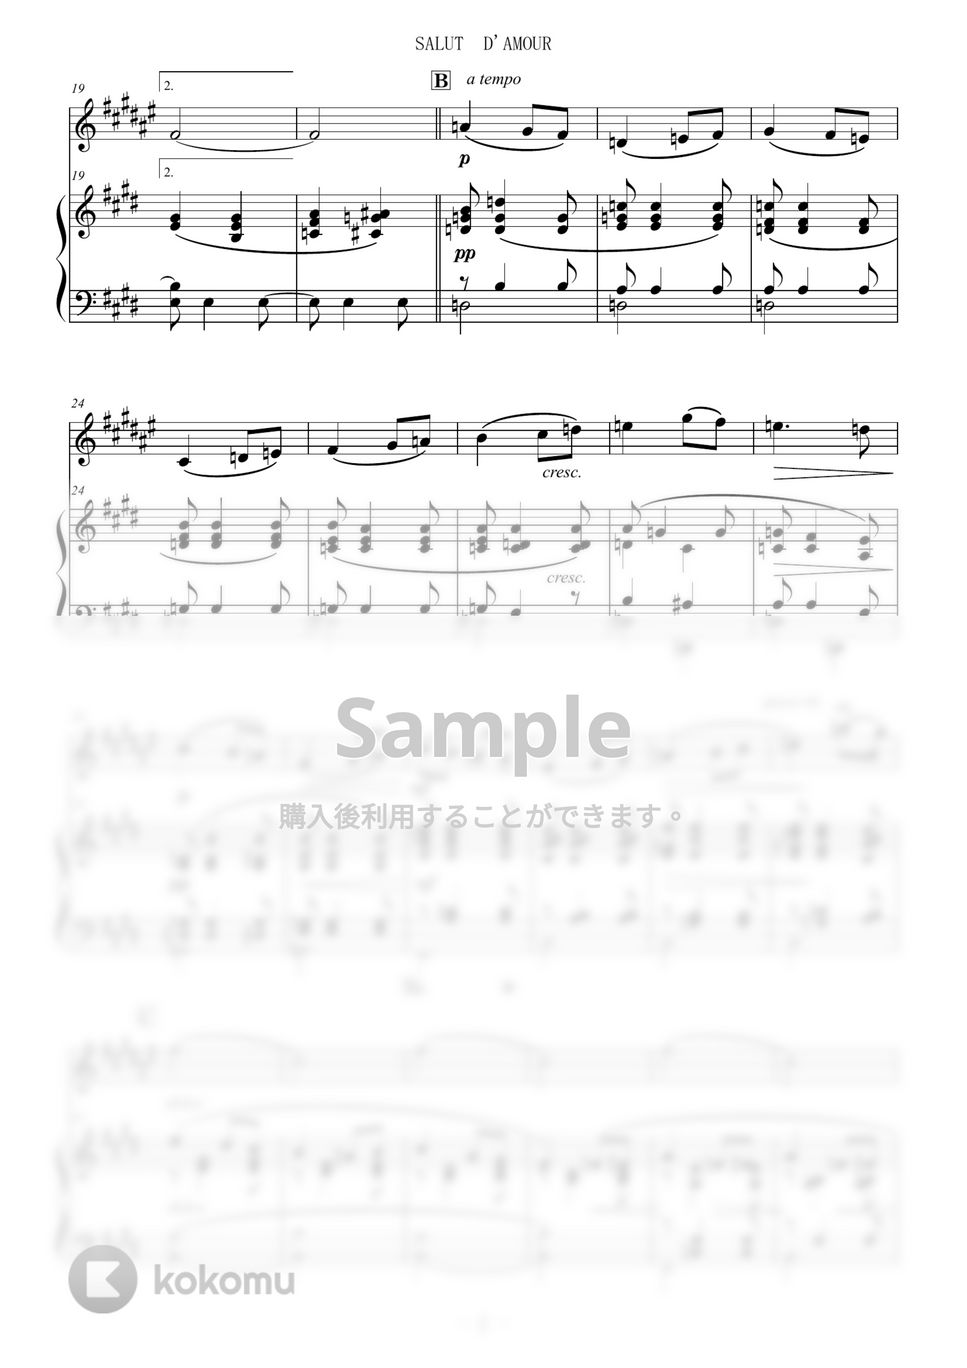 EDWARD ELGAR - 愛の挨拶 / SALUT D'AMOUR  for Trumpet and Piano (原調版) ※Bb管/C管 用譜面付き (エルガー/トランペット/ピアノ/) by Zoe